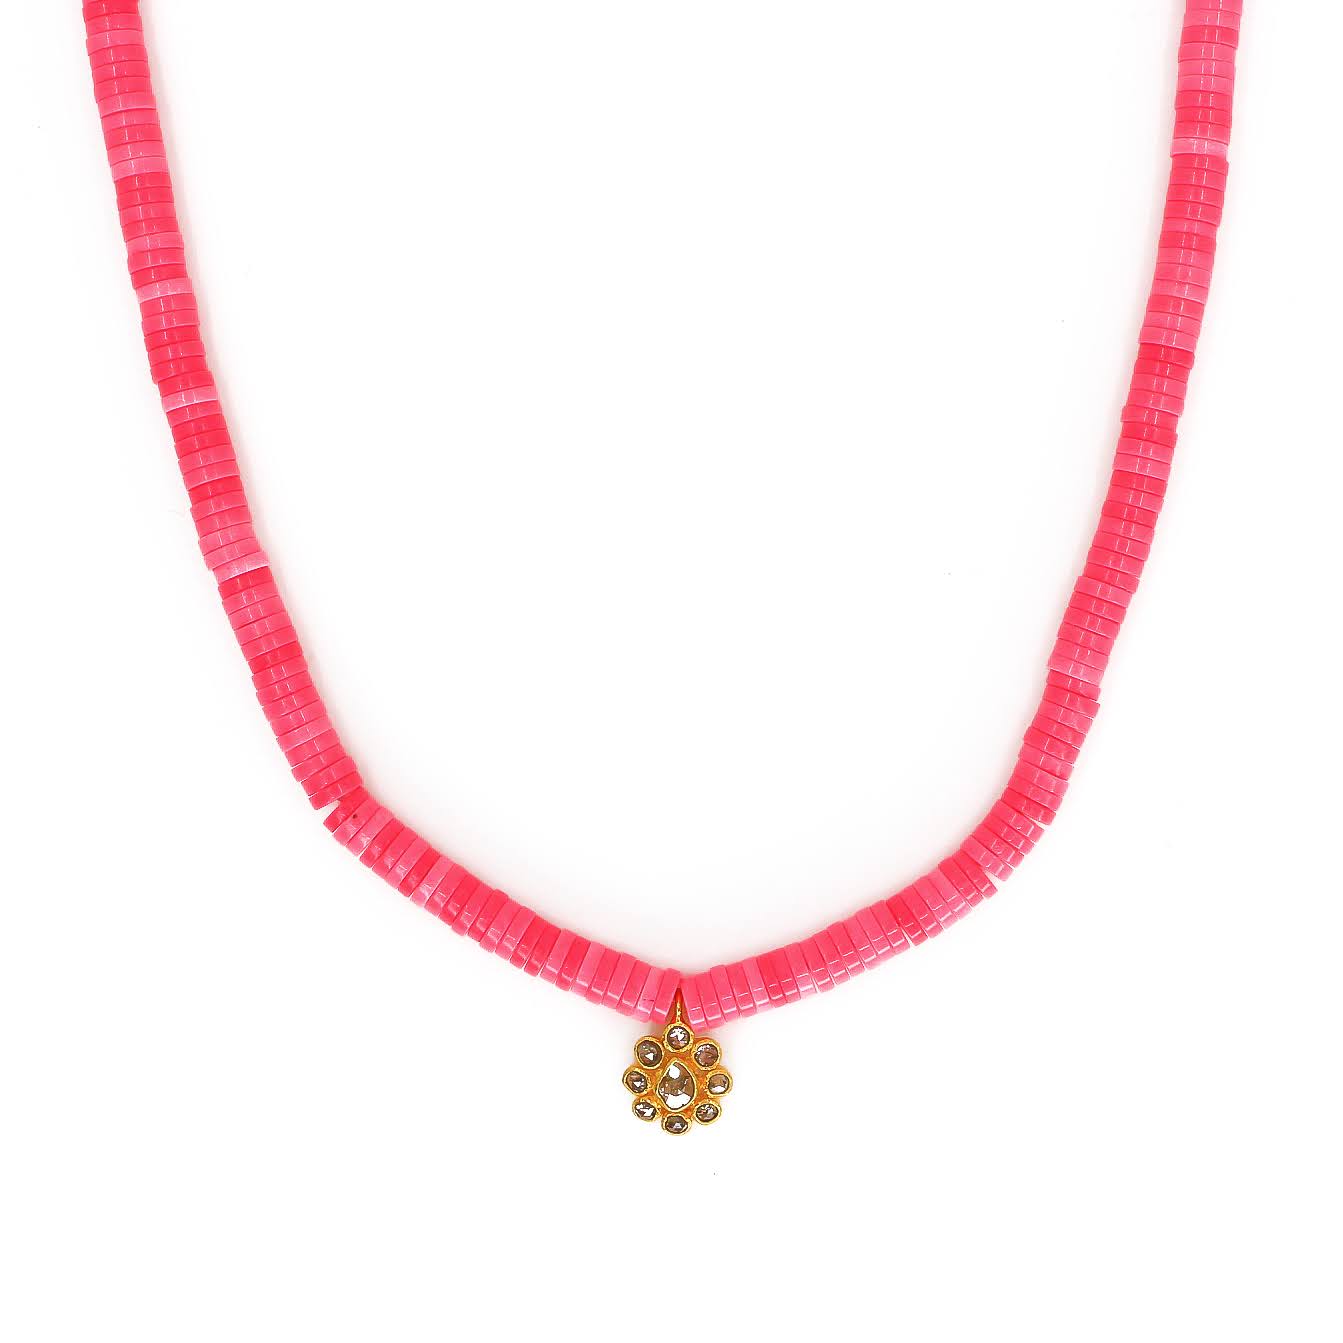 Pink Beaded Necklace With Gold Charm - 14kt Gold - Monisha Melwani Jewelry